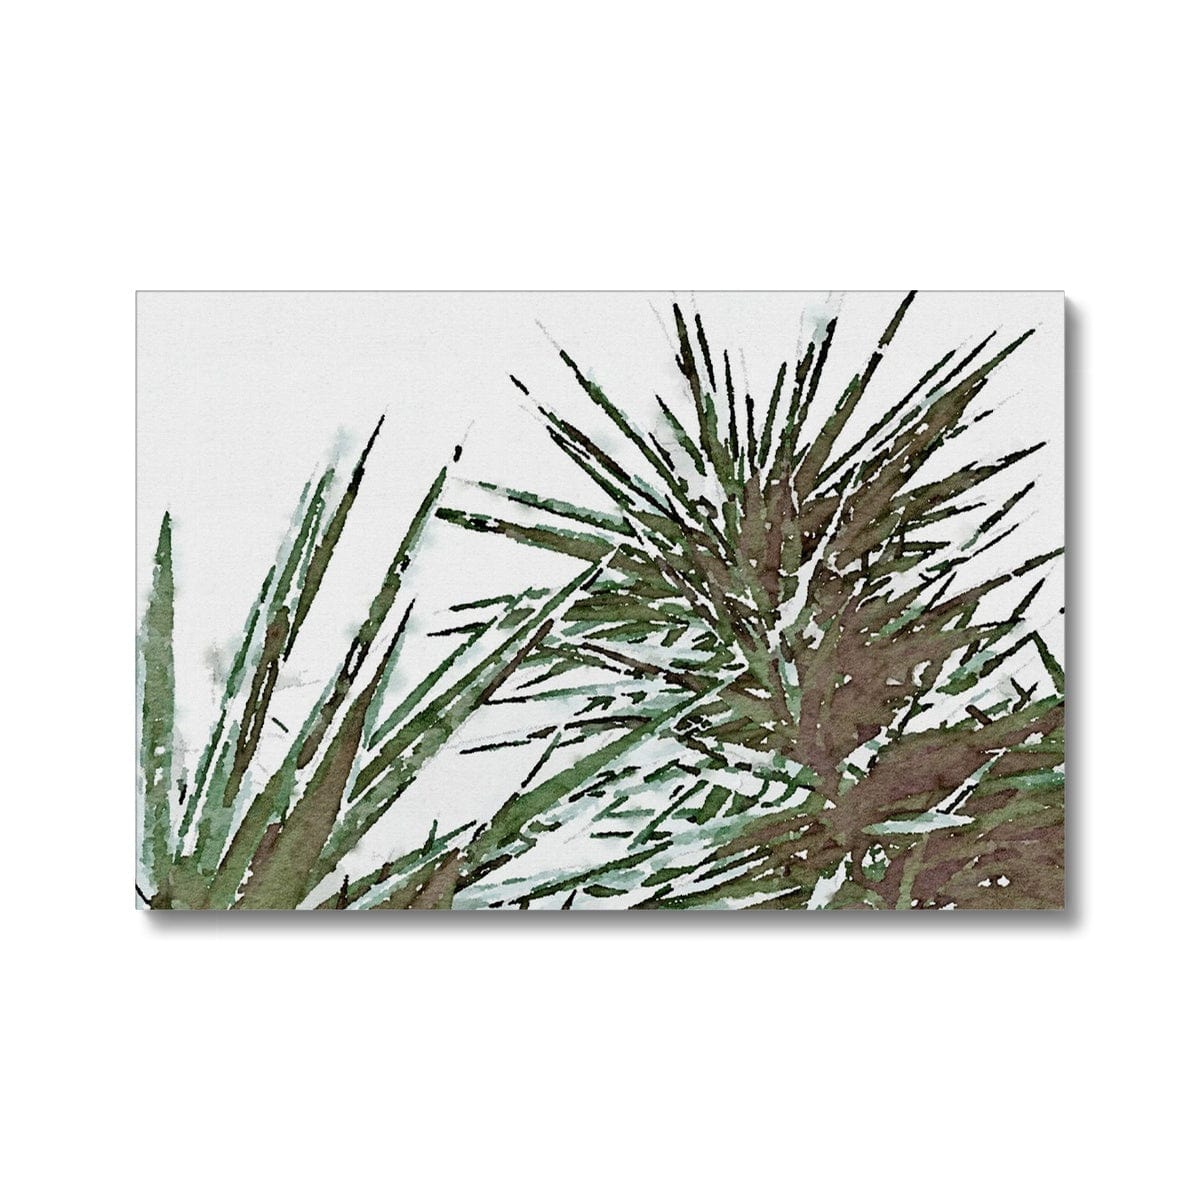 Seek & Ramble Canvas 12"x8" (30.48x20.32cm) / Image Wrap Yucca Eco Canvas